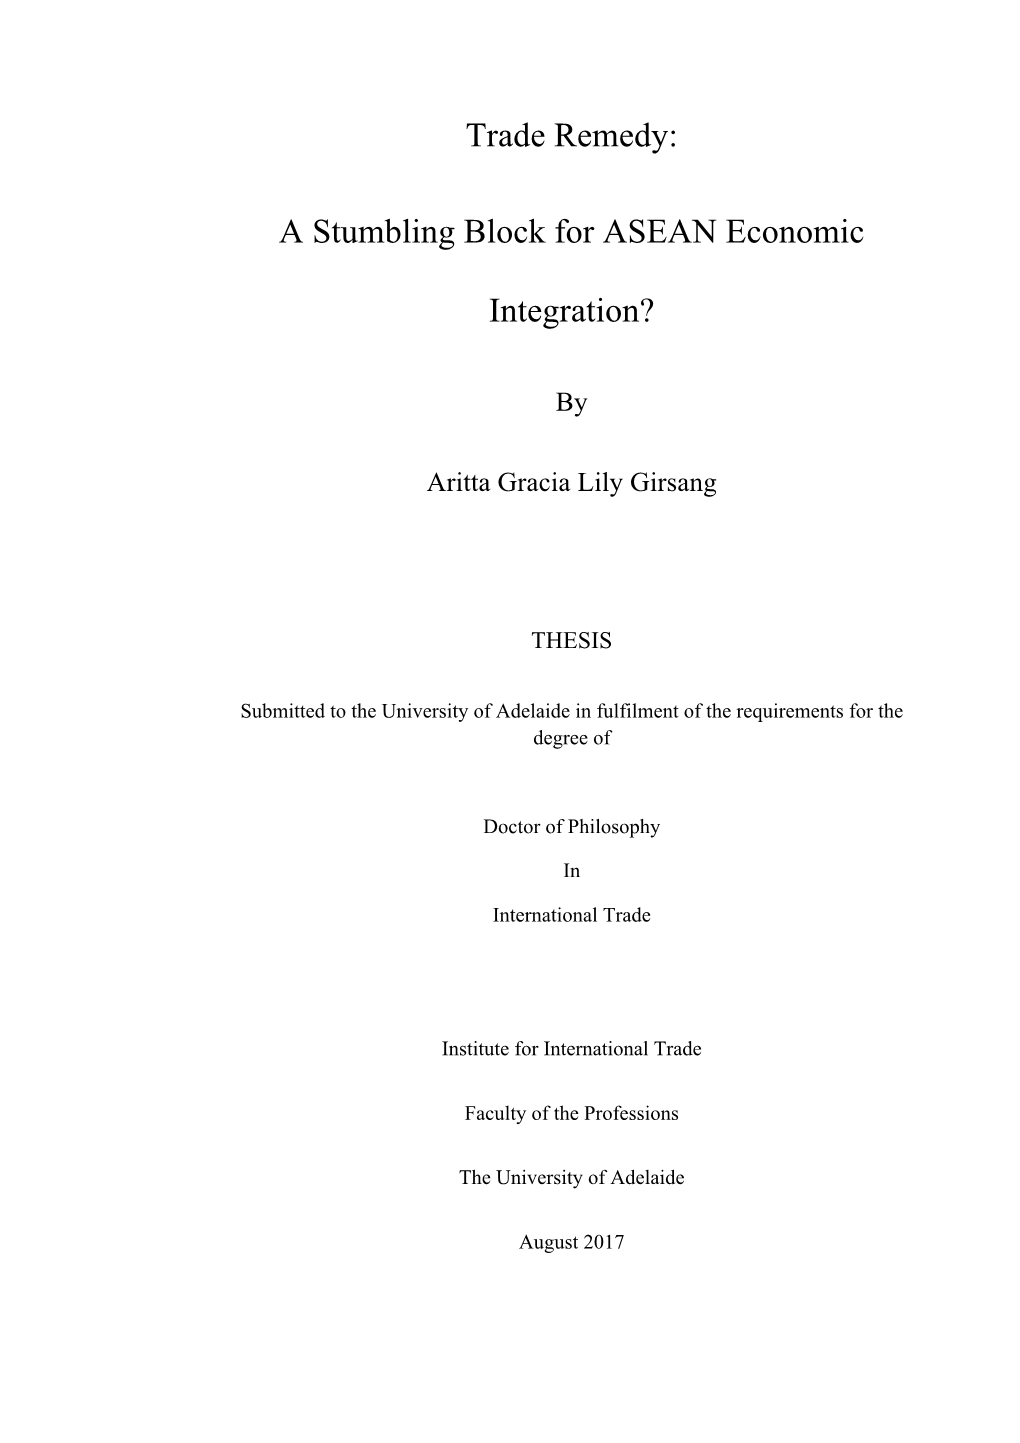 Trade Remedy: a Stumbling Block for ASEAN Economic Integration?